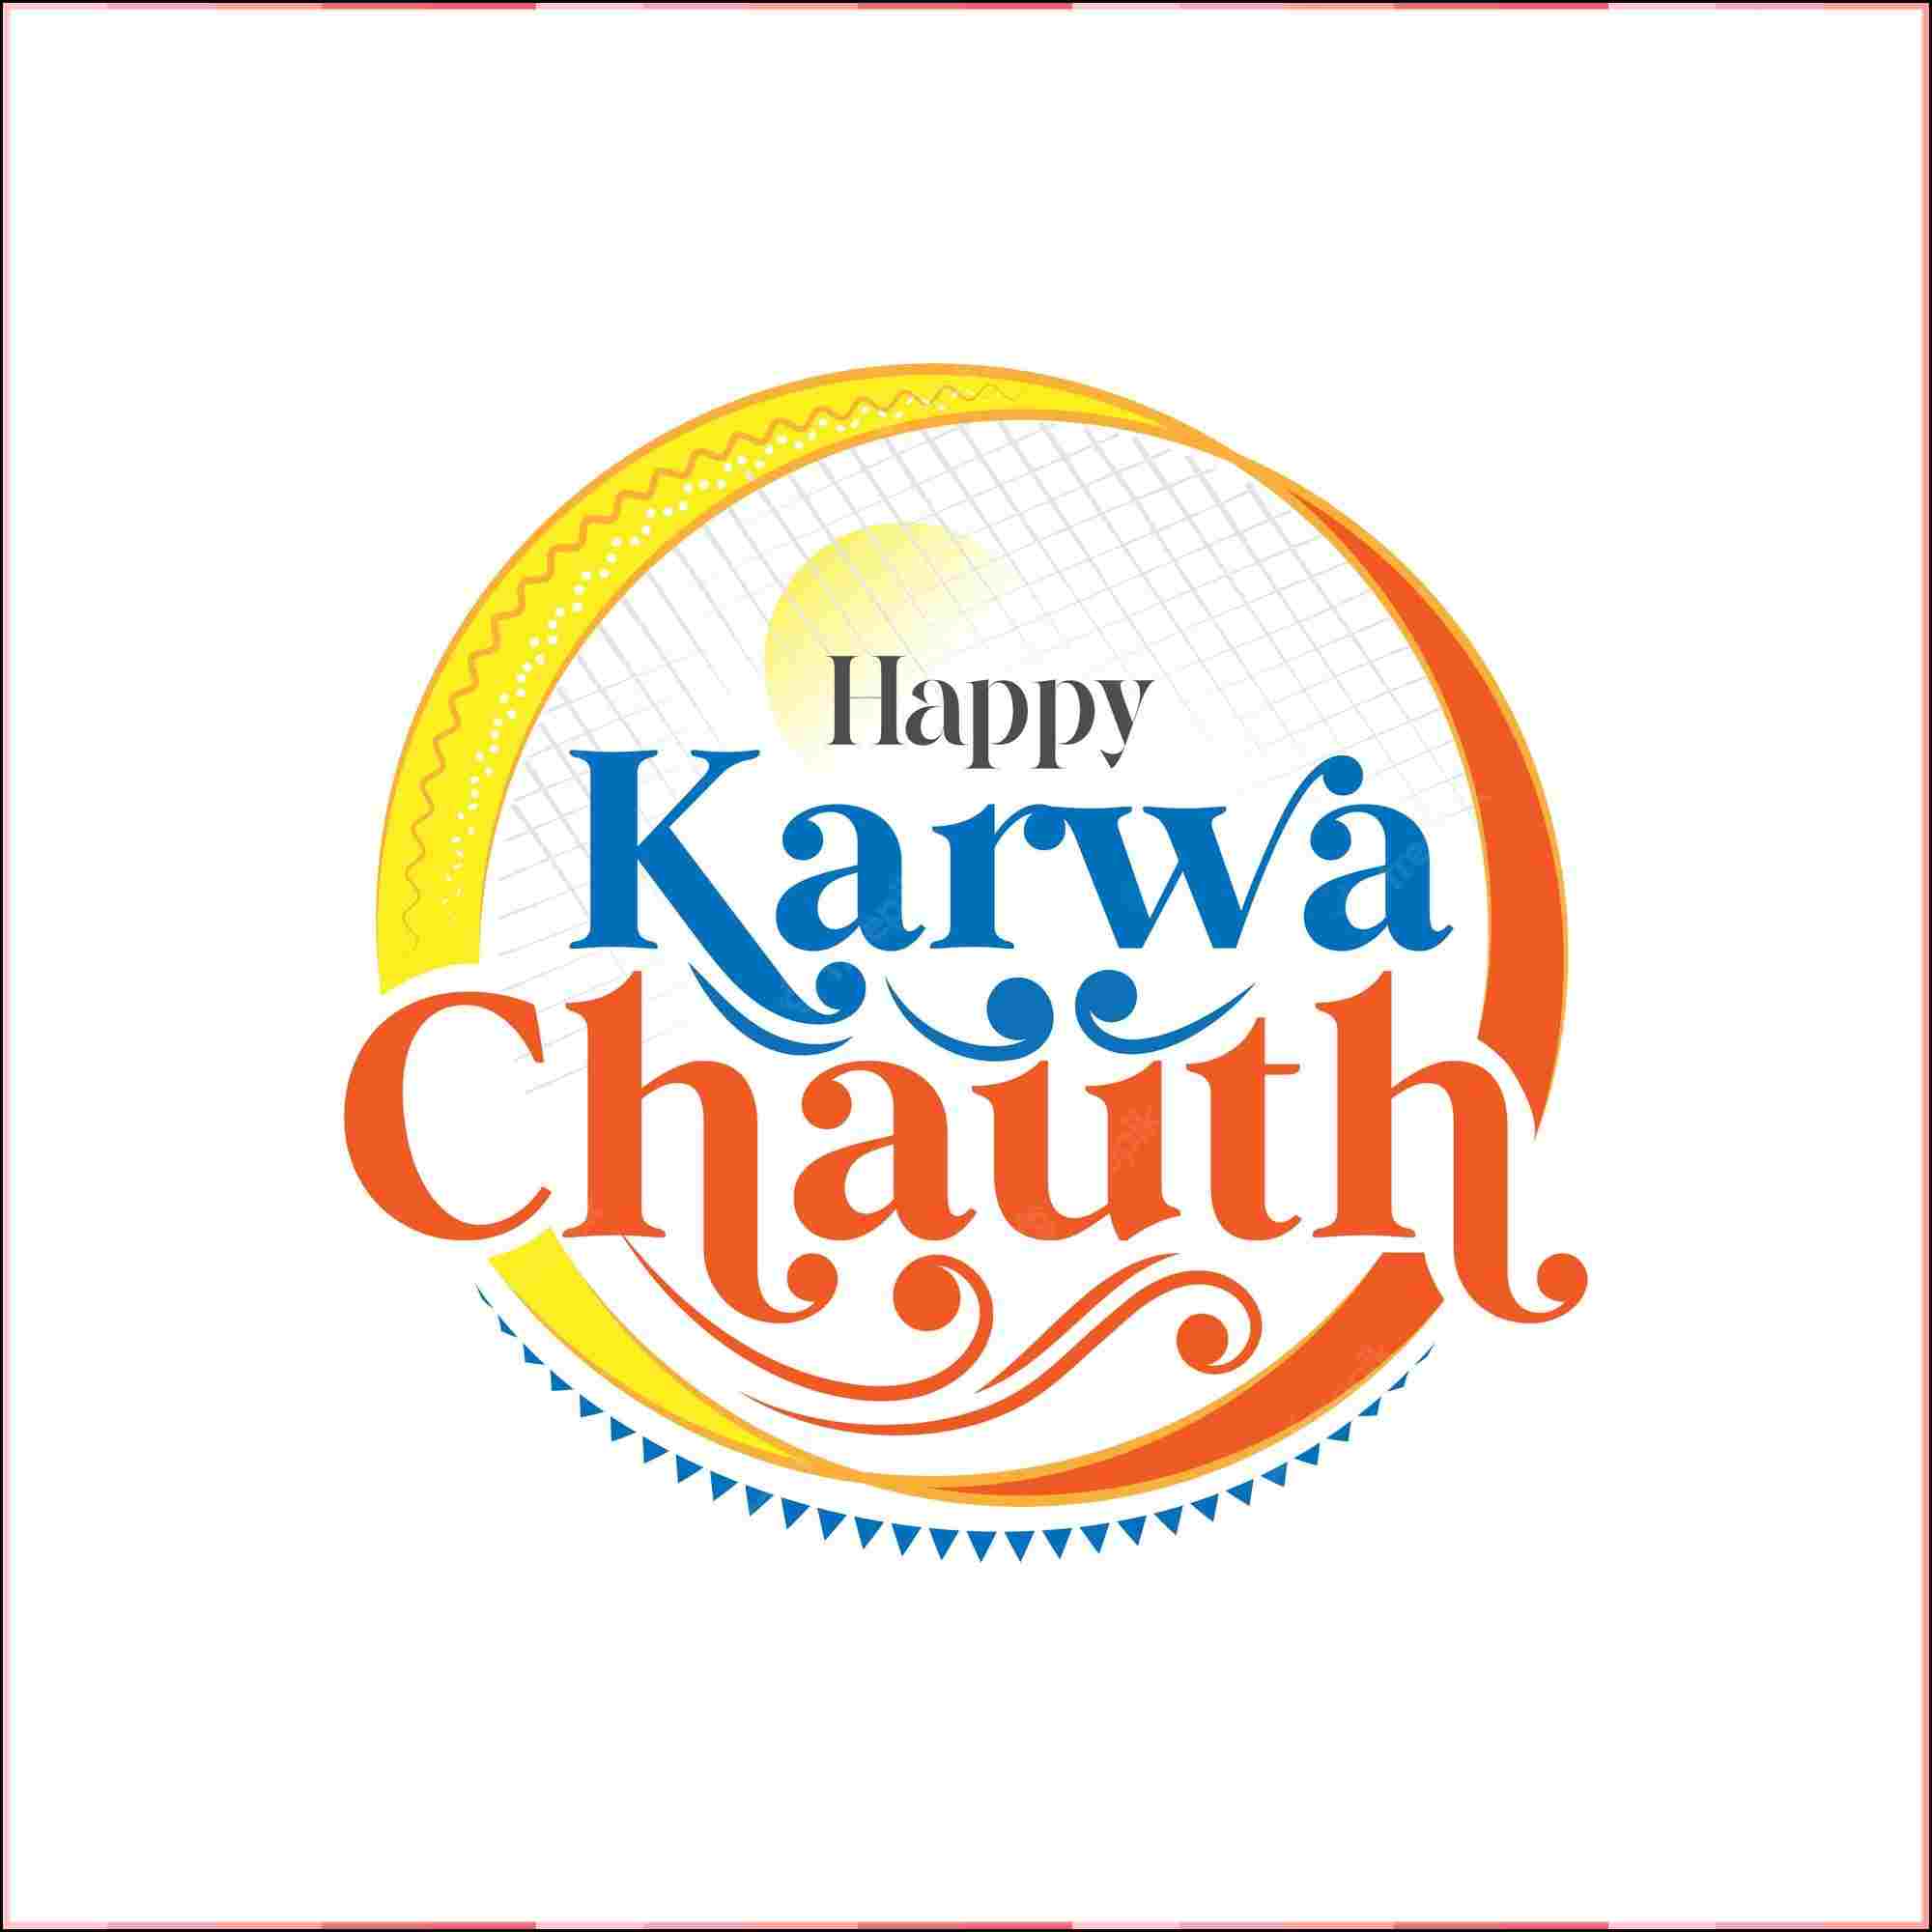 images of karwa chauth
